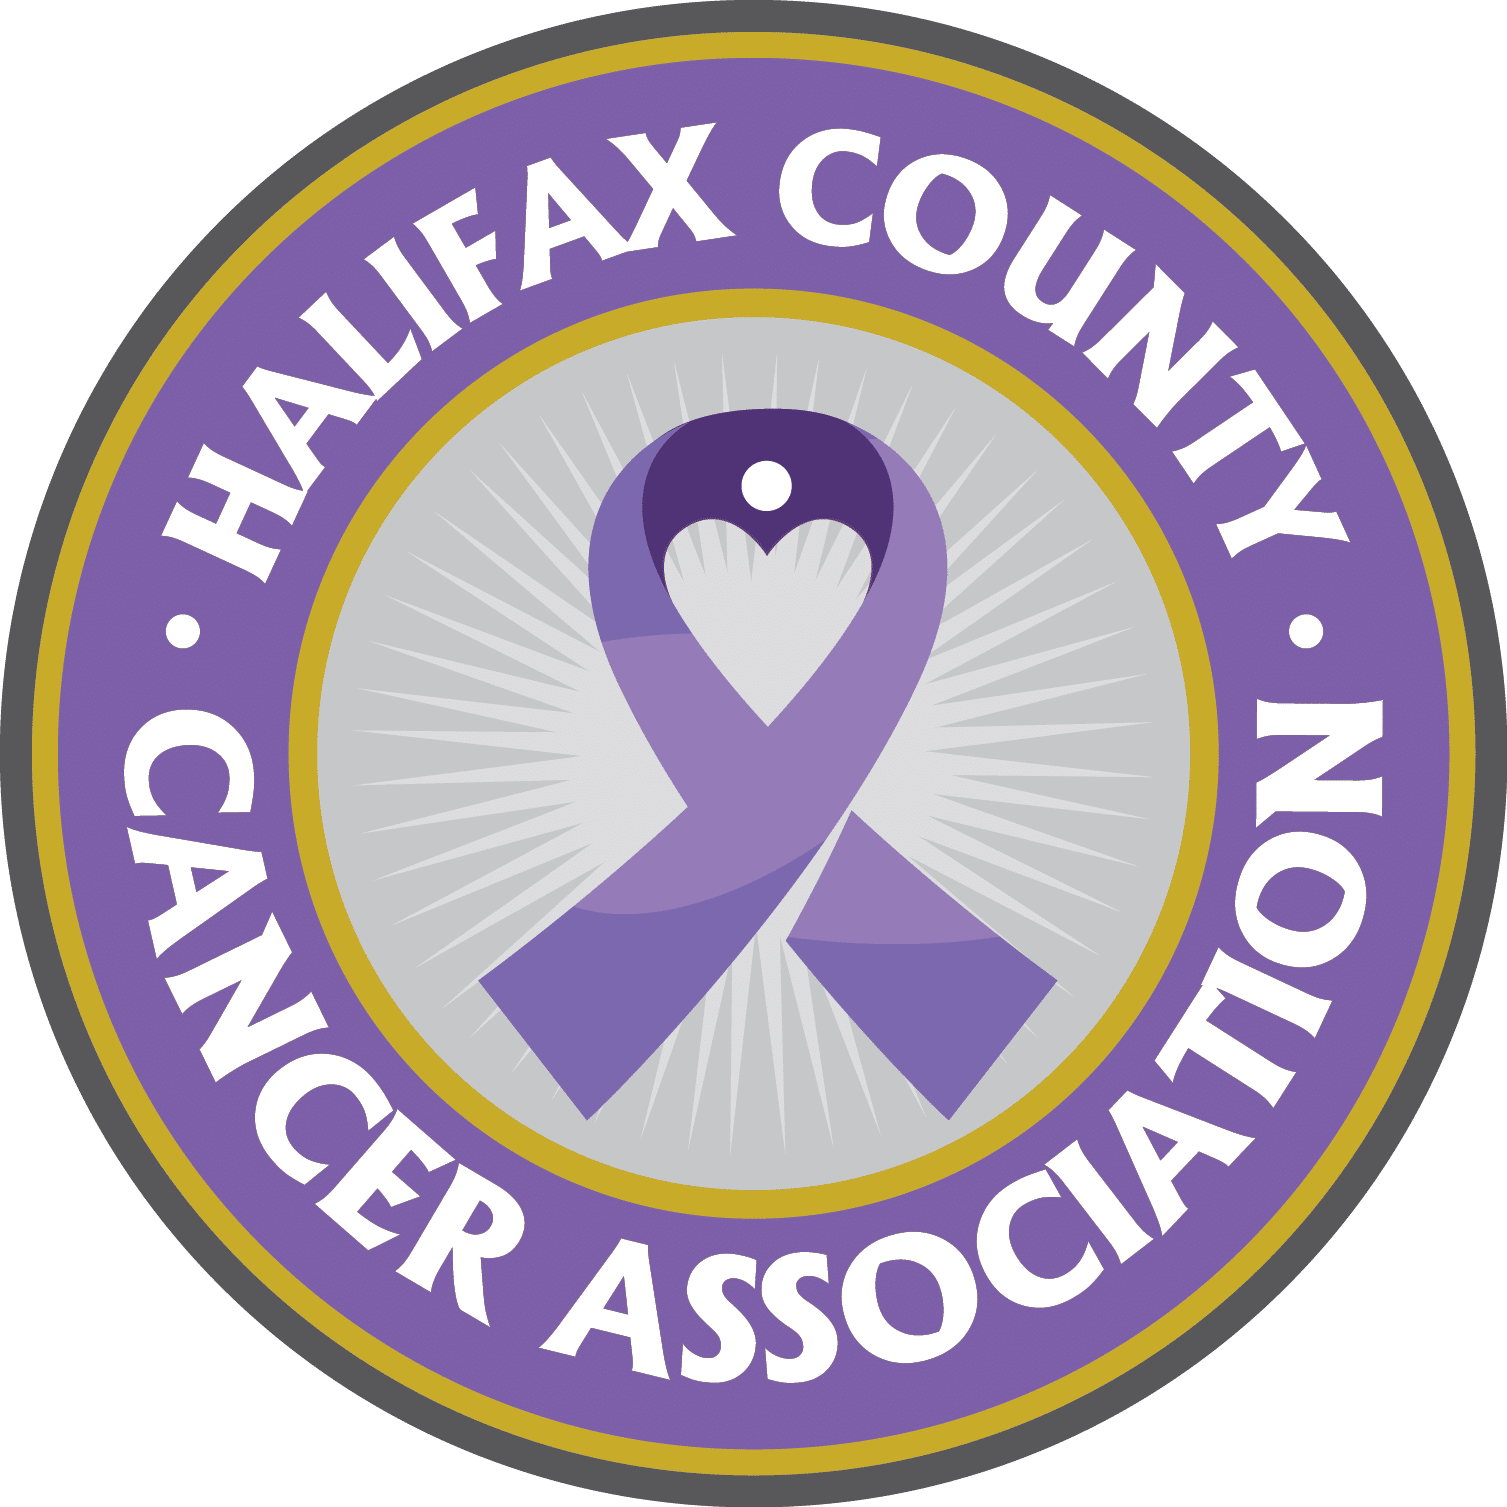 Halifax County Cancer Association